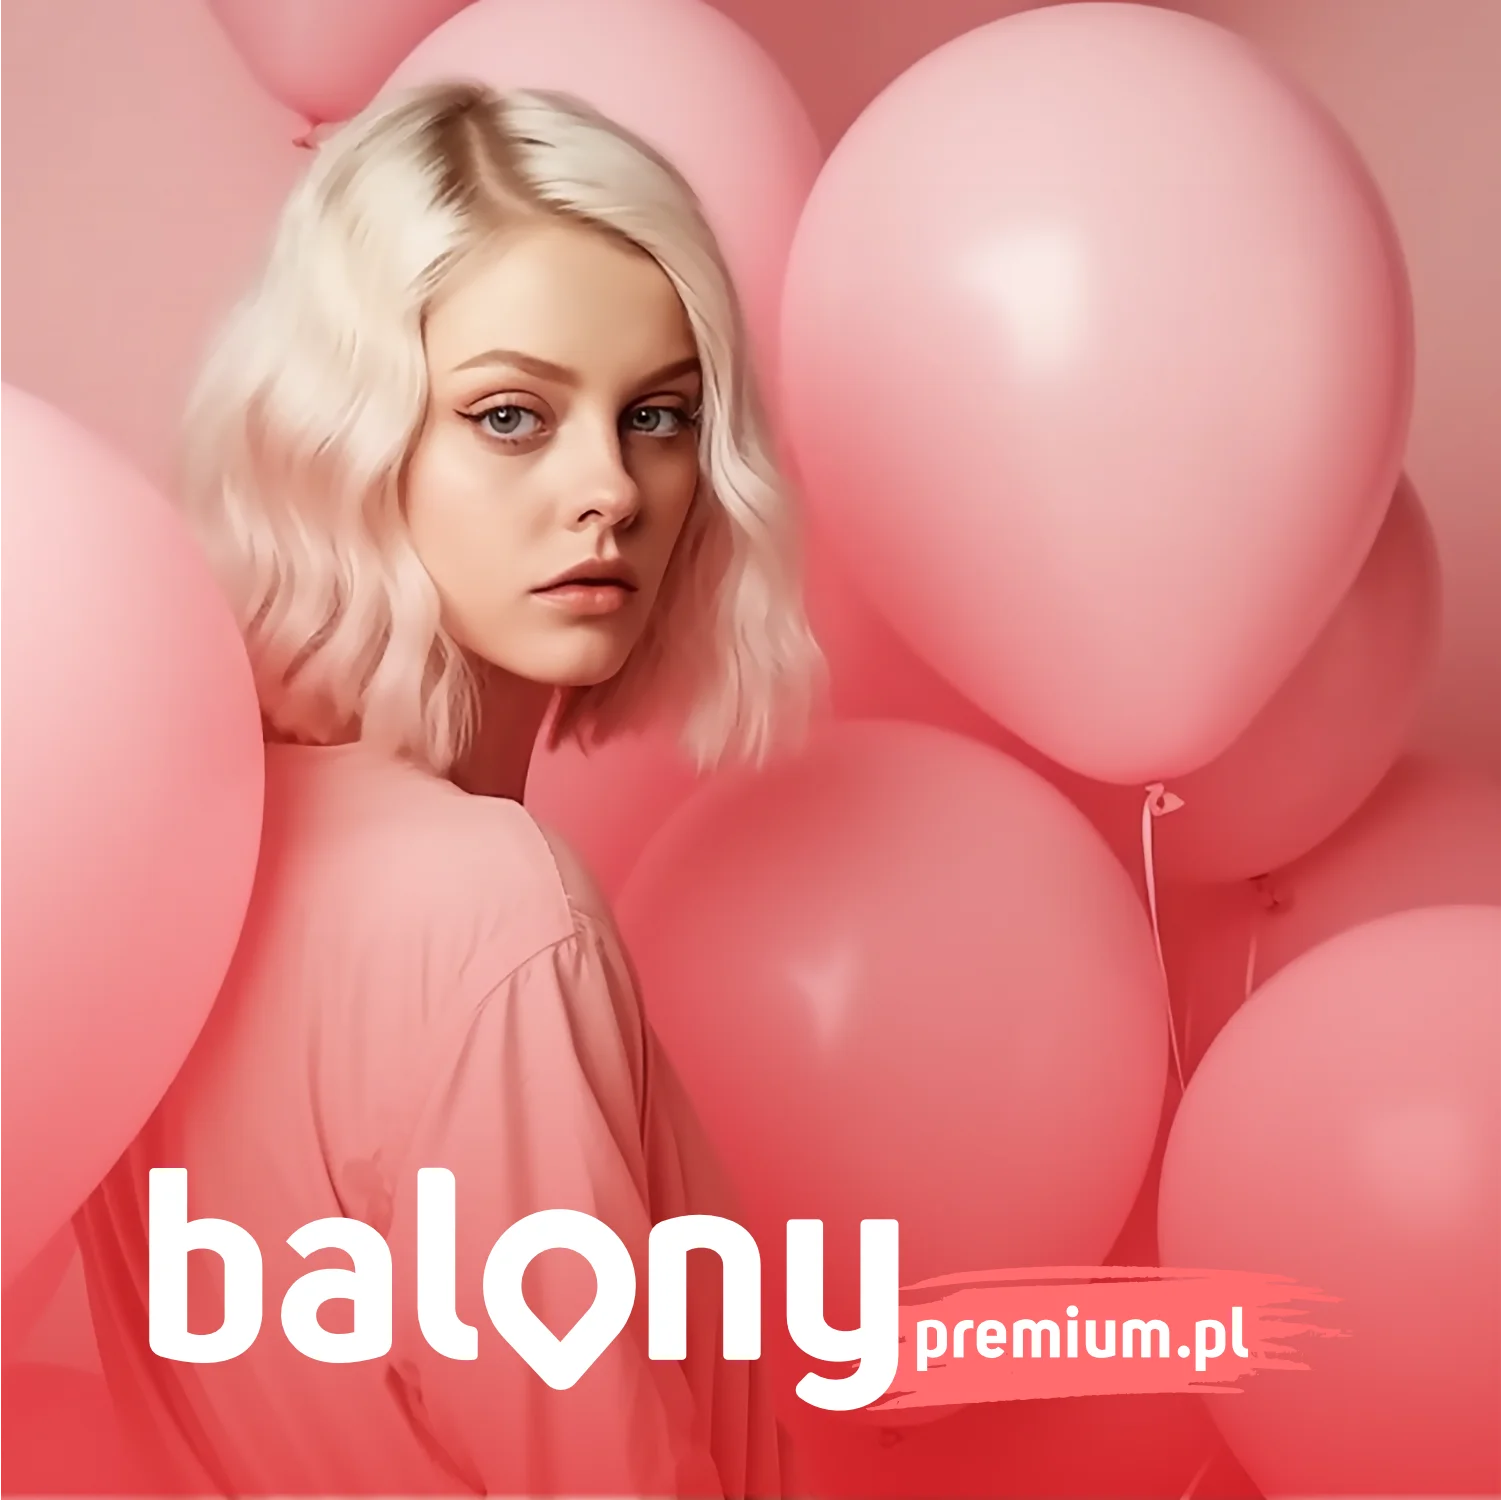 balony-premium.pl – kreacja marki ecommerce